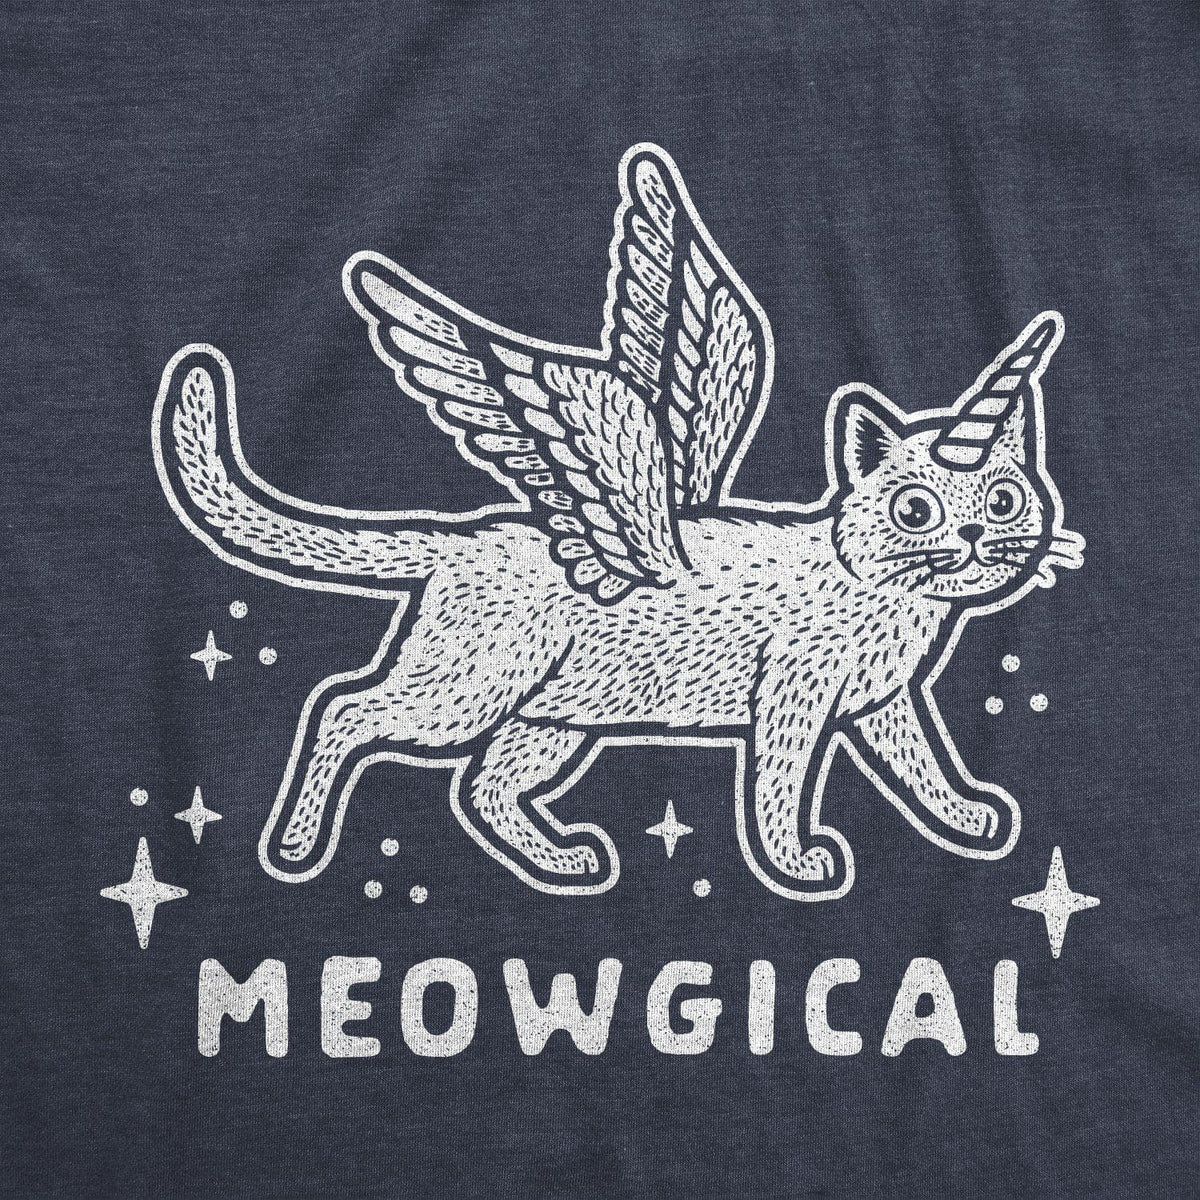 Meowgical Women&#39;s Tshirt - Crazy Dog T-Shirts